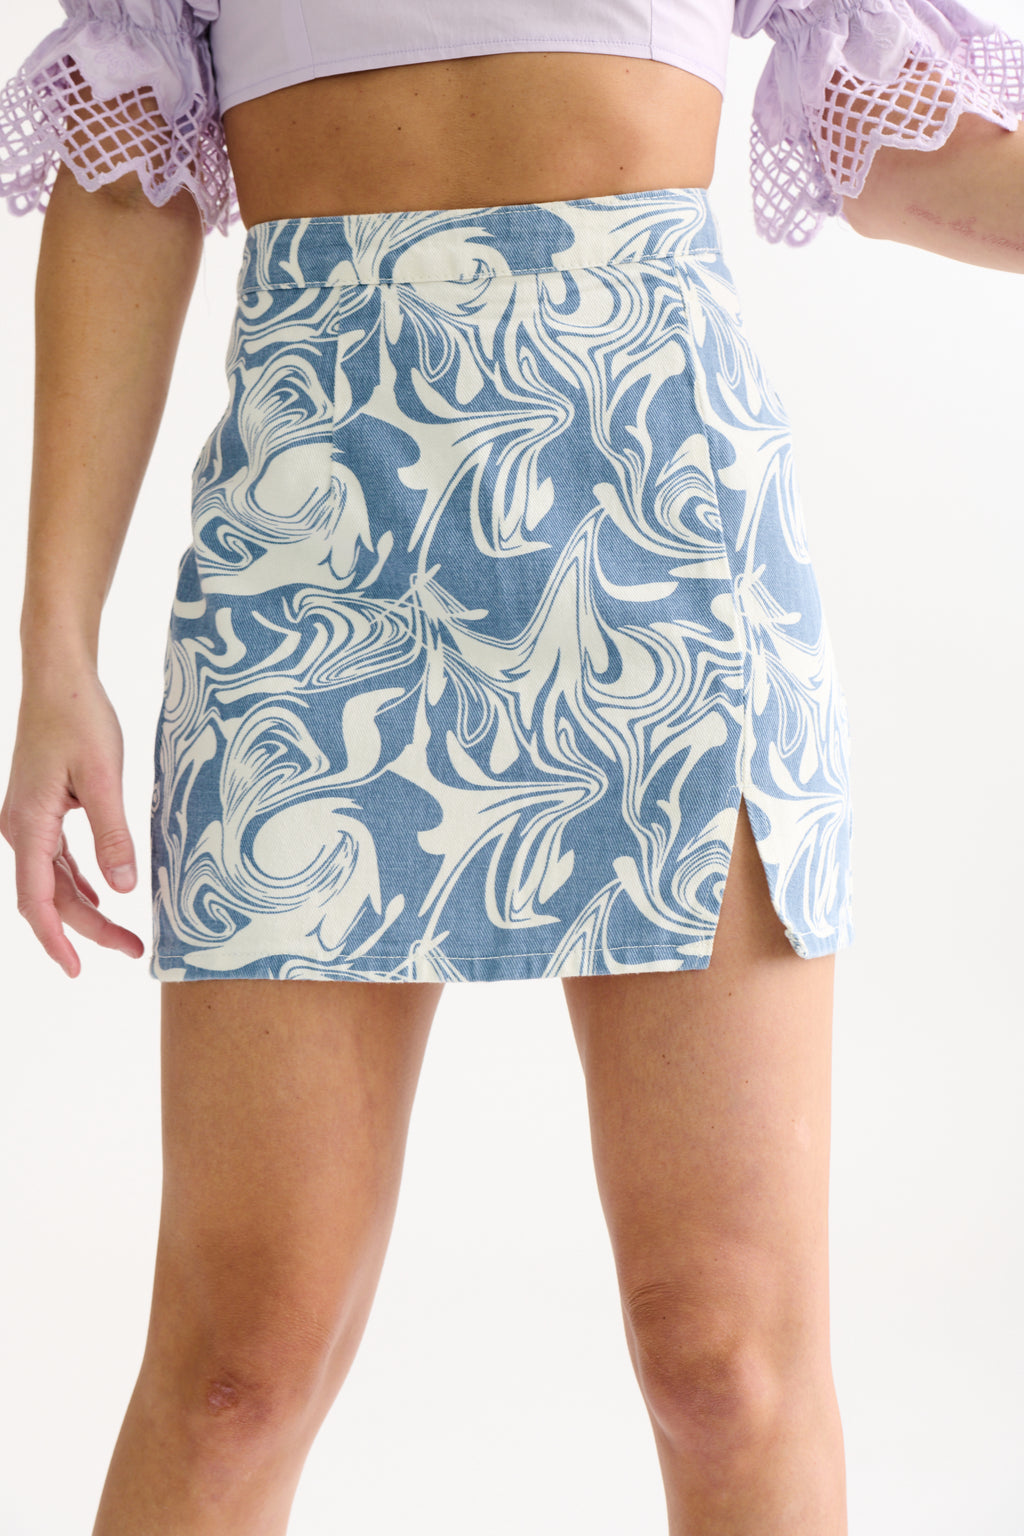 Swirled Together Skirt